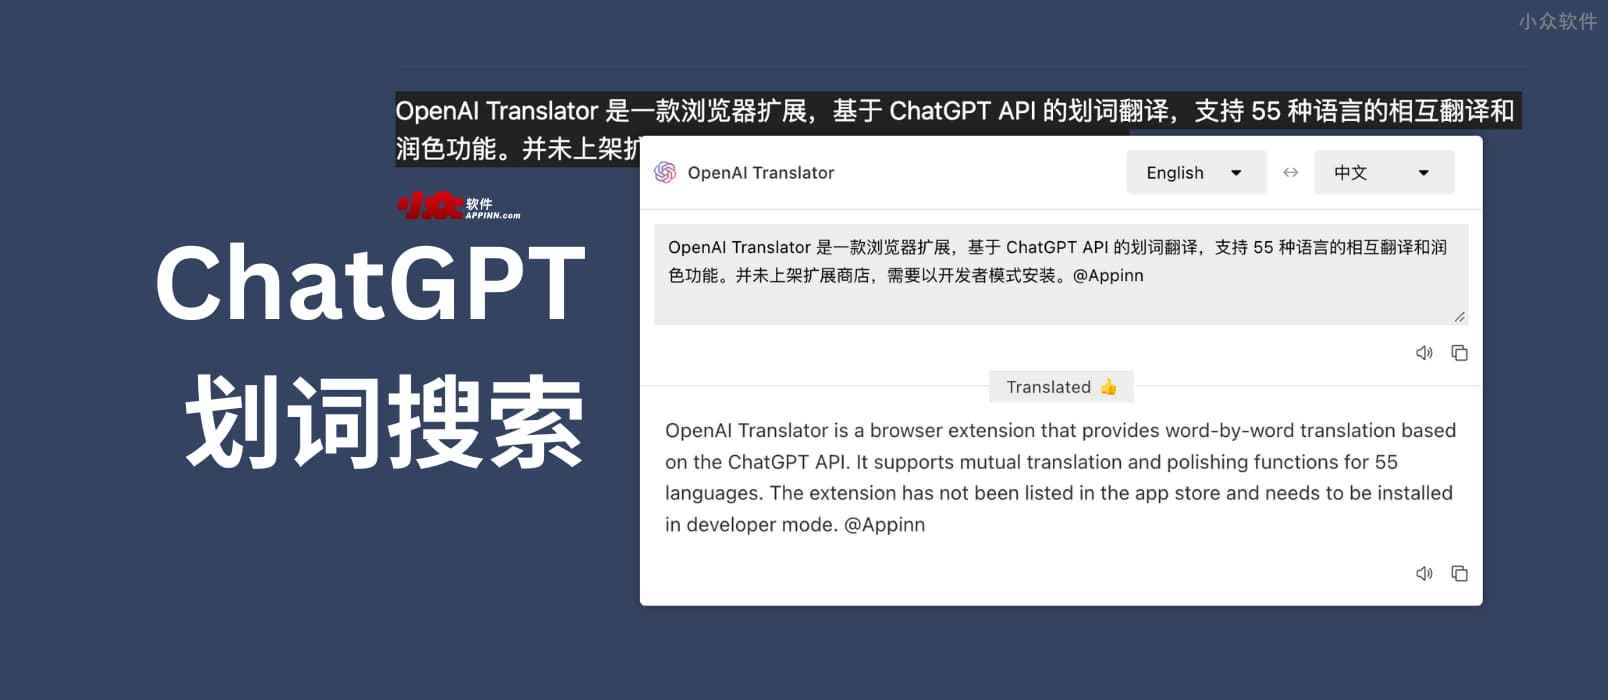 OpenAI Translator – 基于 ChatGPT API 的划词翻译，55 种语言互译[Chrome]